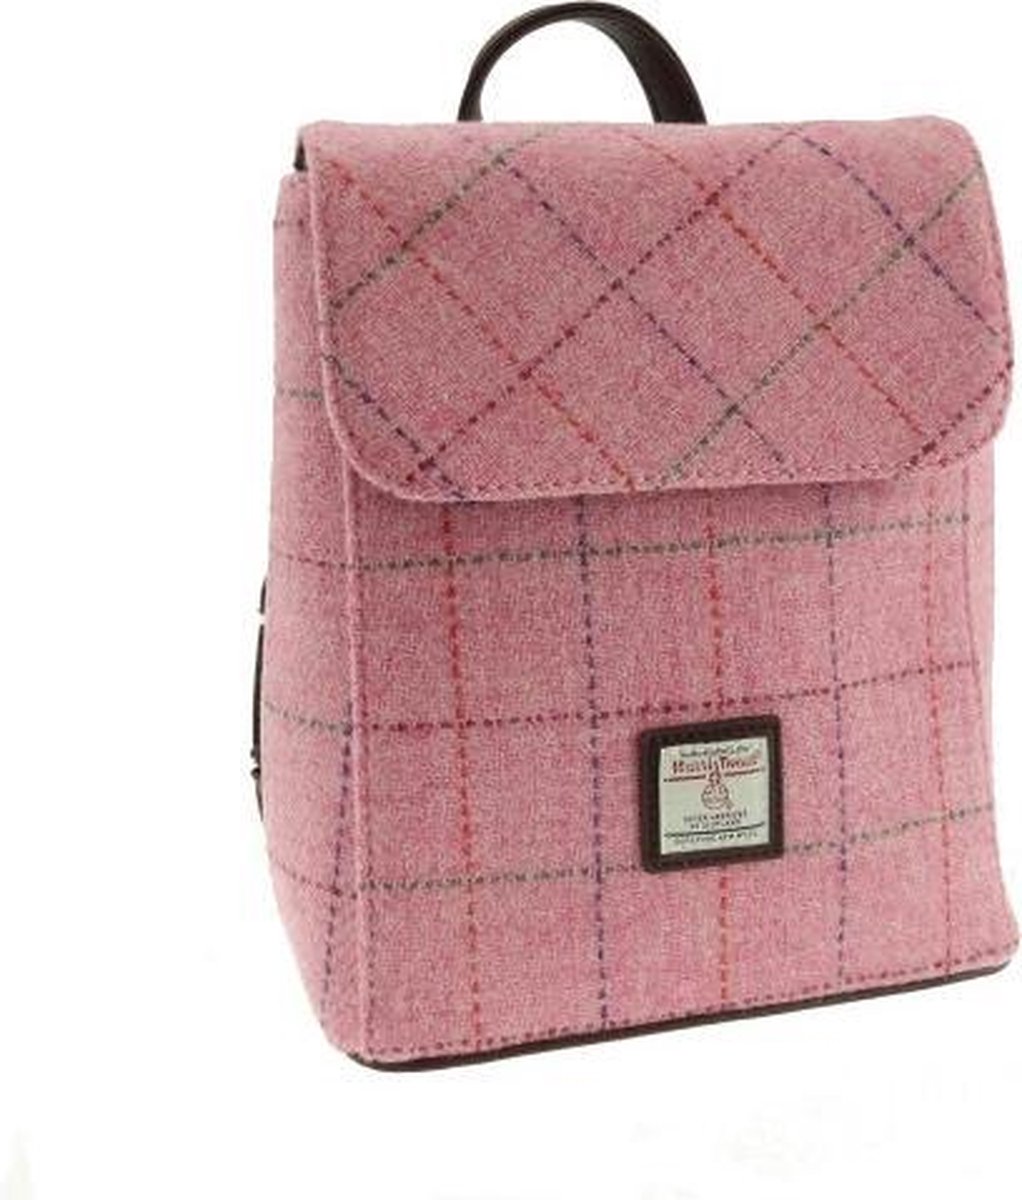 Glen Appin Mini Rugzak Tummel Bright Pink Overcheck - Echte Harris Tweed - Made in Scotland